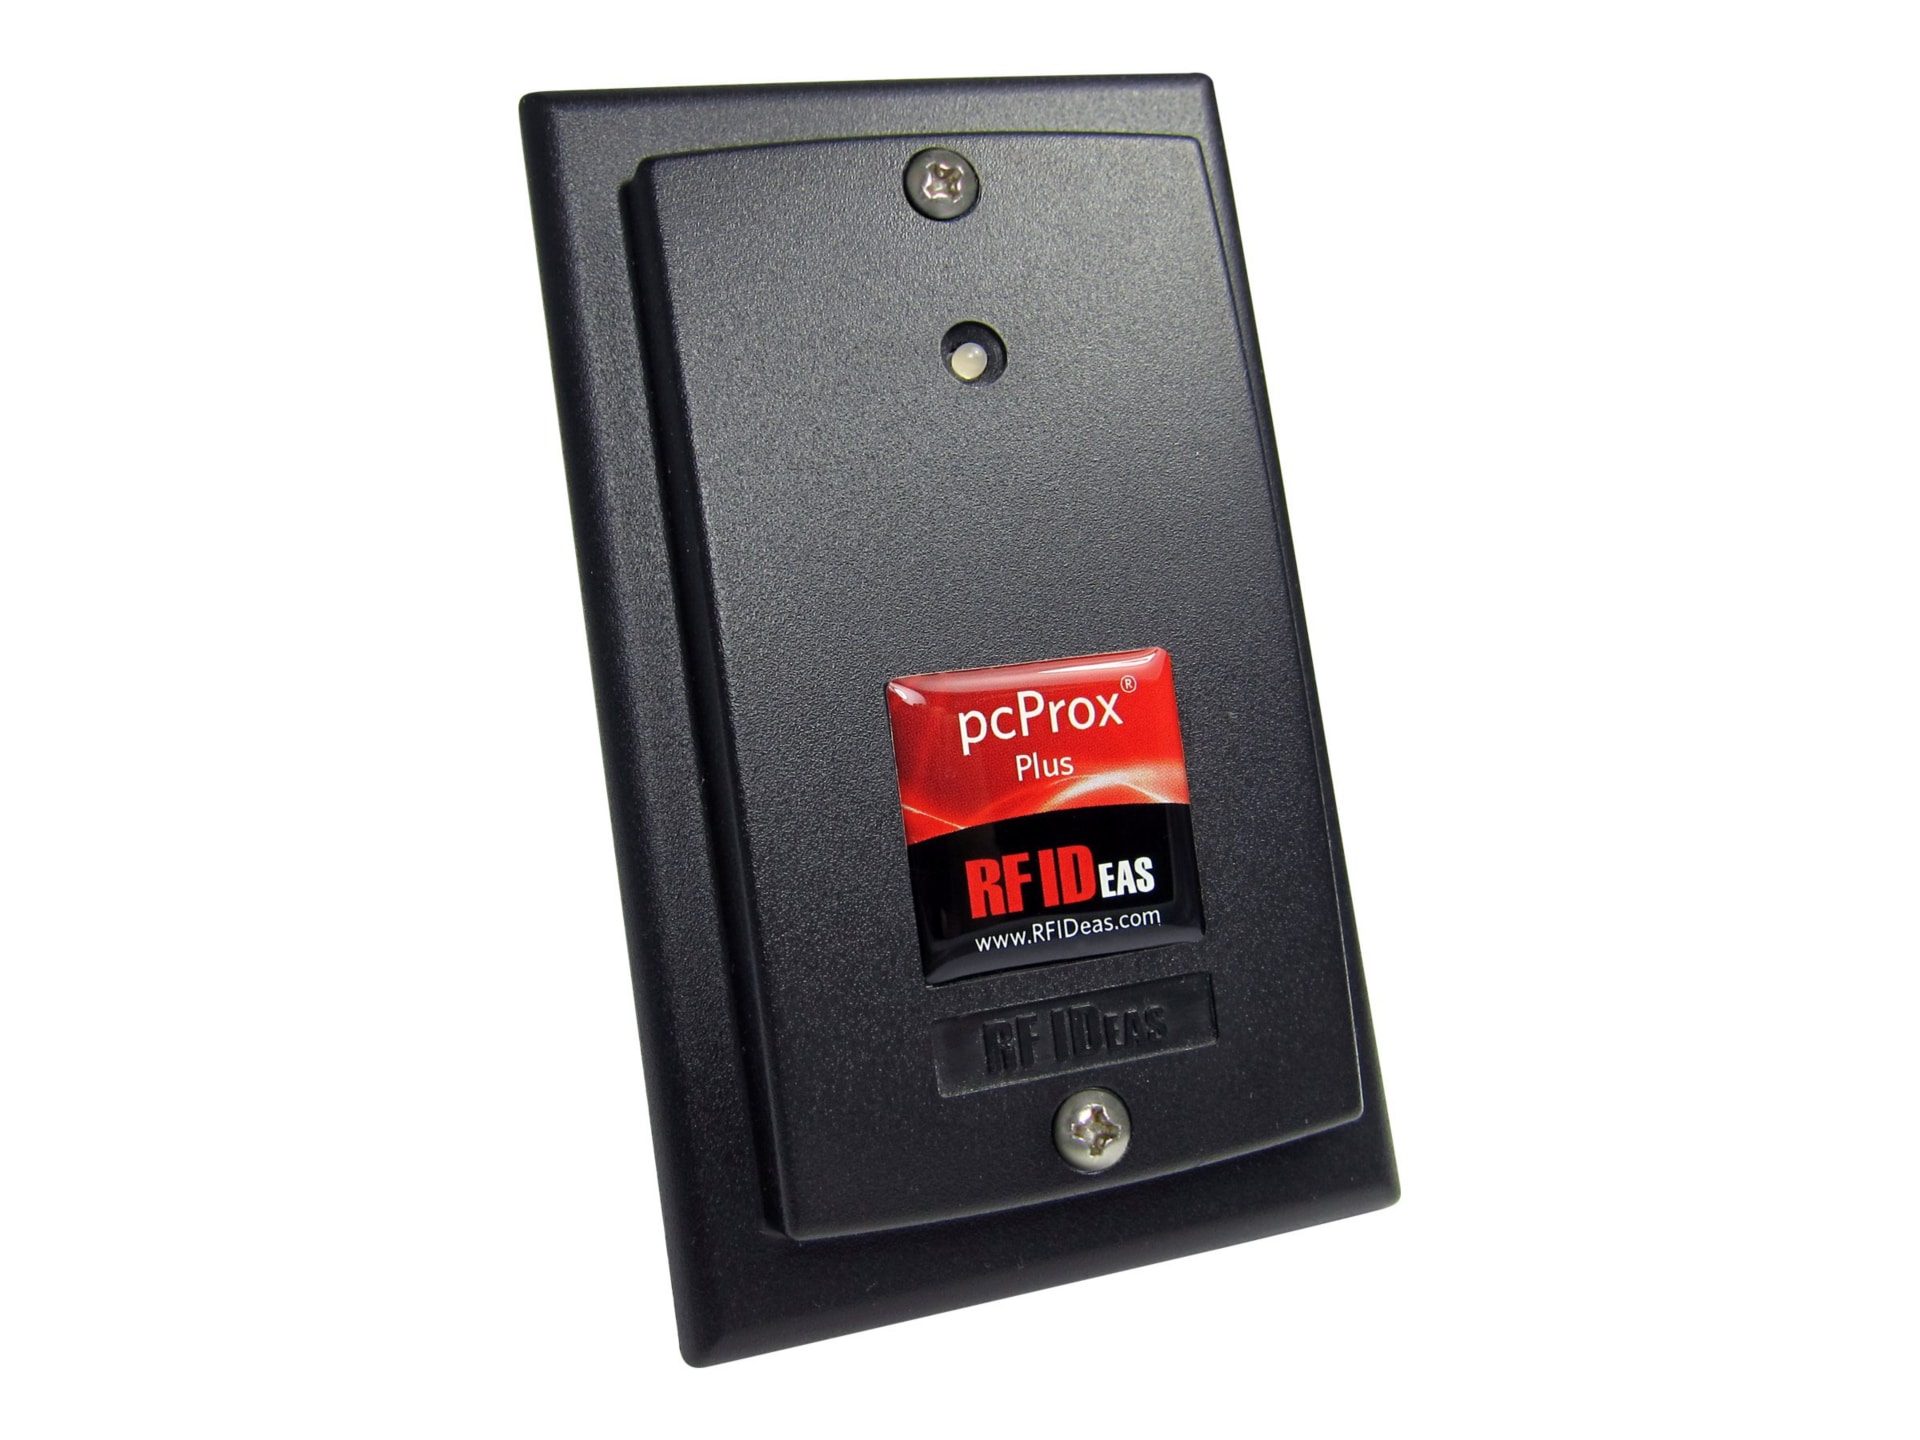 RF IDeas WAVE ID Plus Keystroke V2 Black Surface Mount Reader - Power over